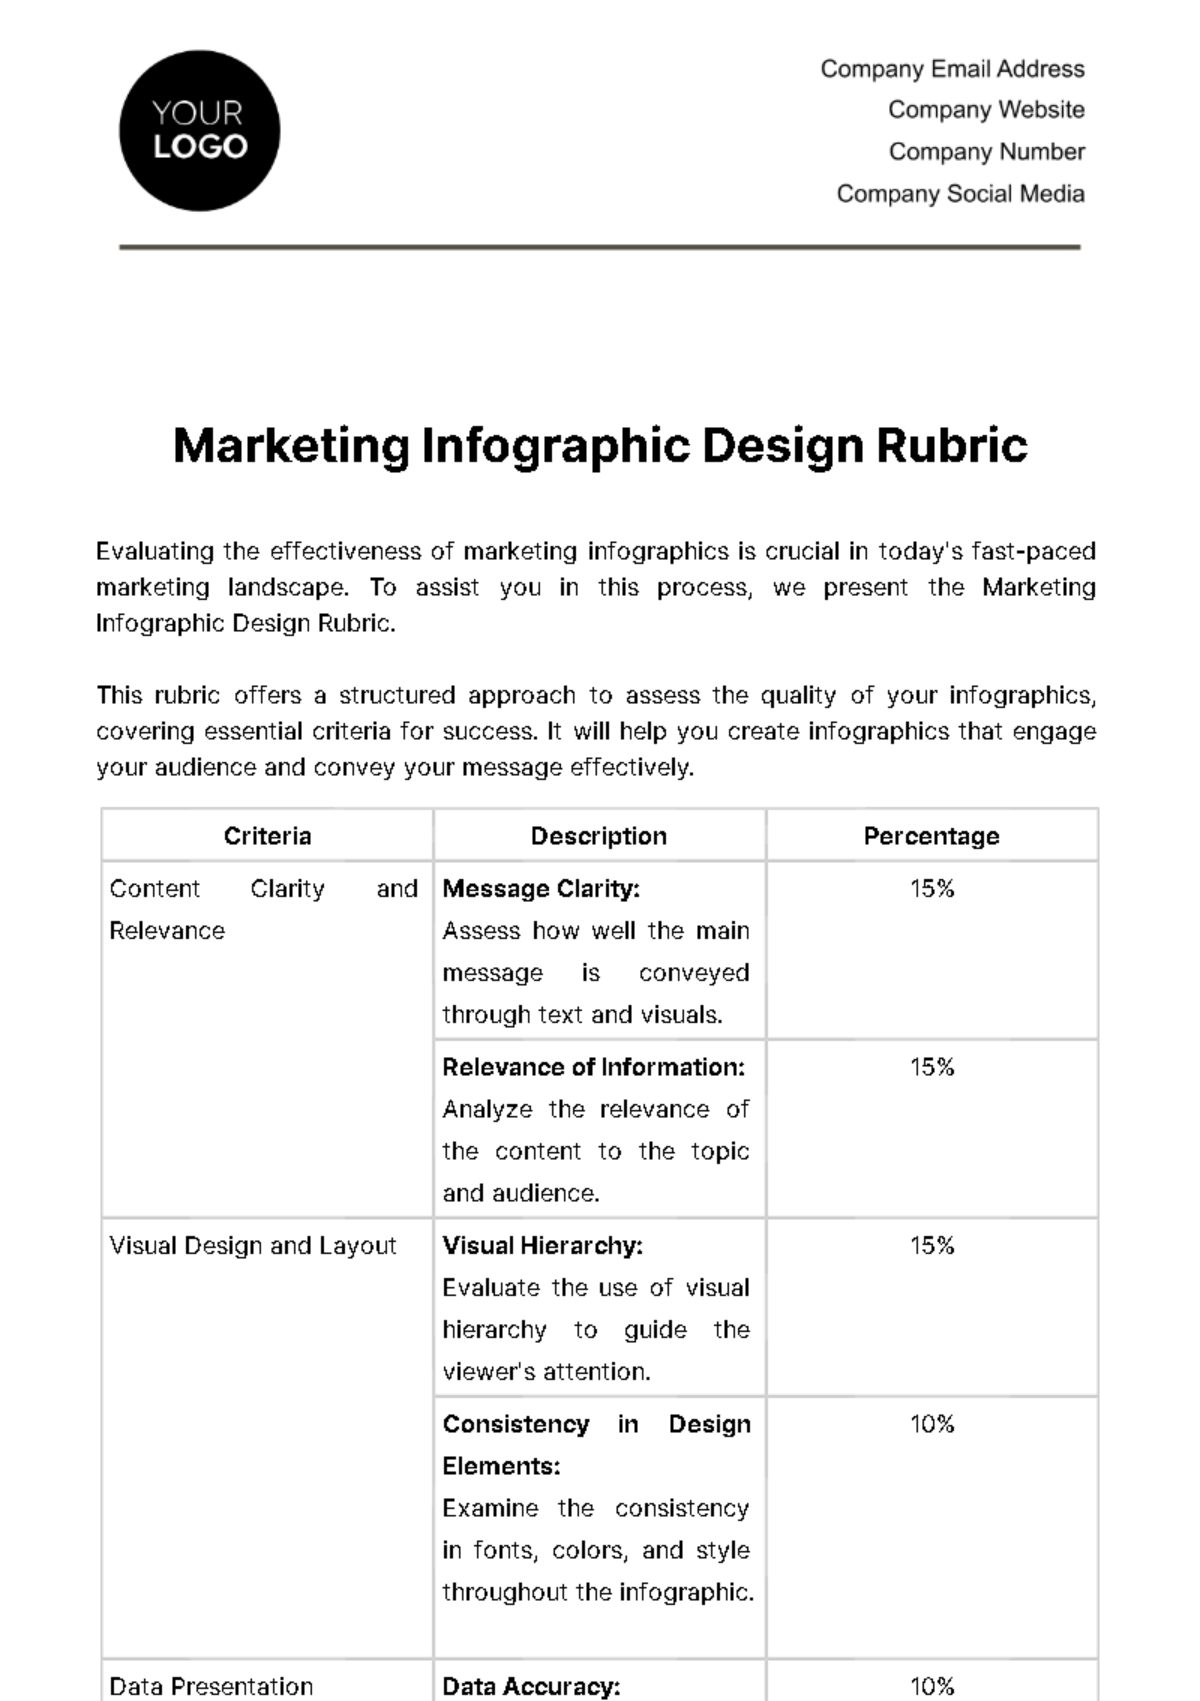 Free Marketing Infographic Design Rubric Template